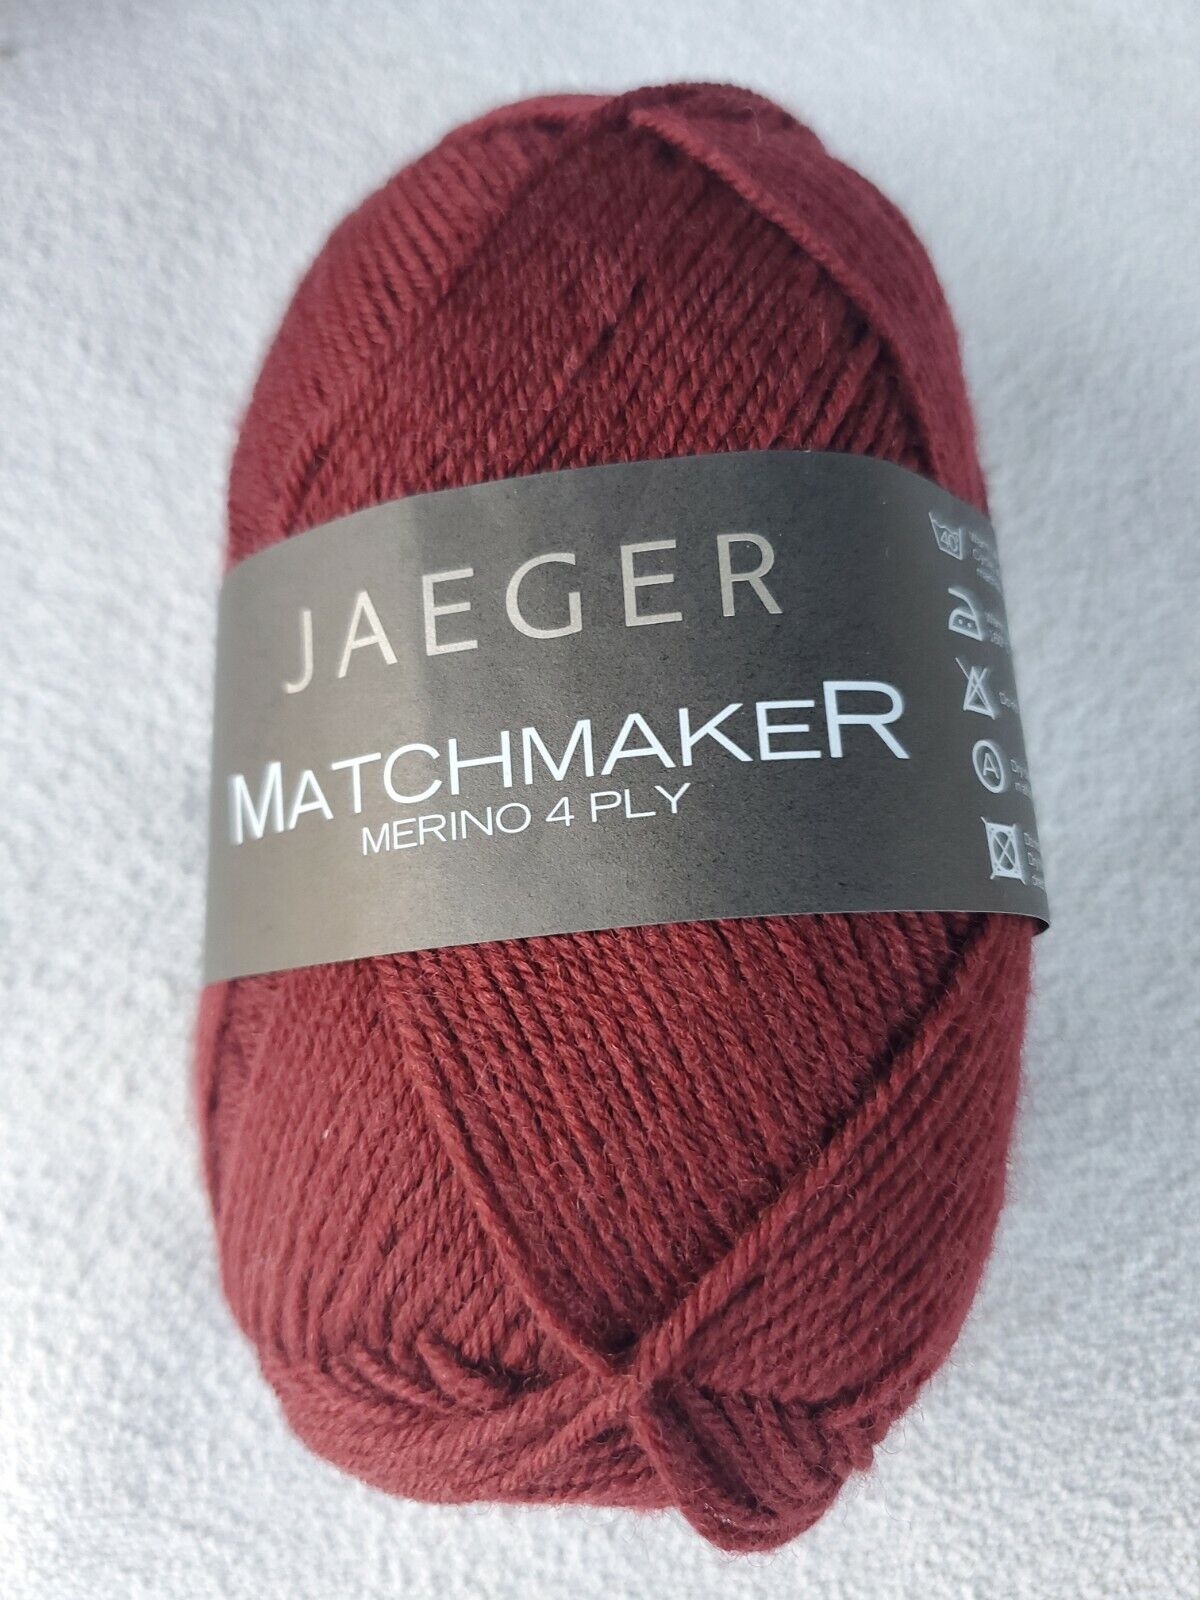 Jaeger Matchmaker Yarn Merino 4 Ply 100% Merino Wool Color 757